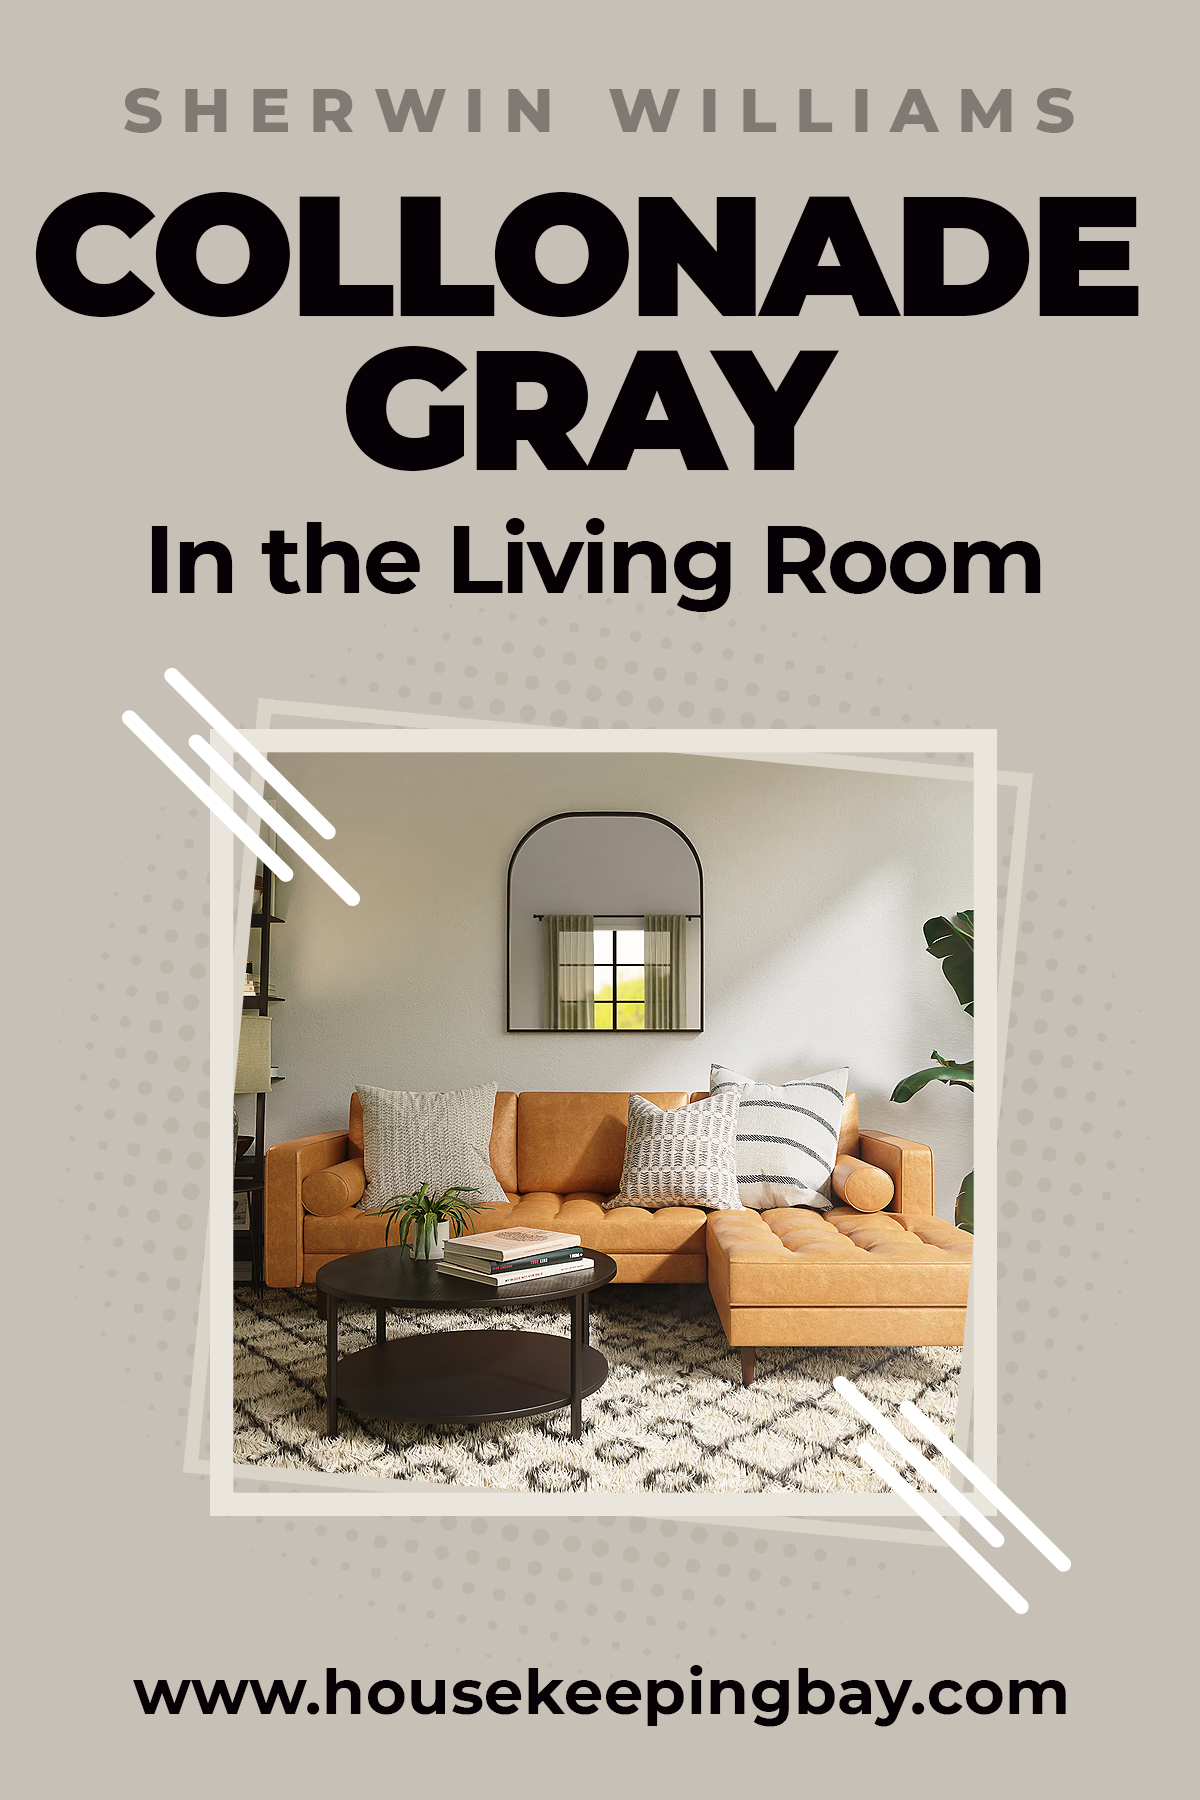 Collonade gray in the living room